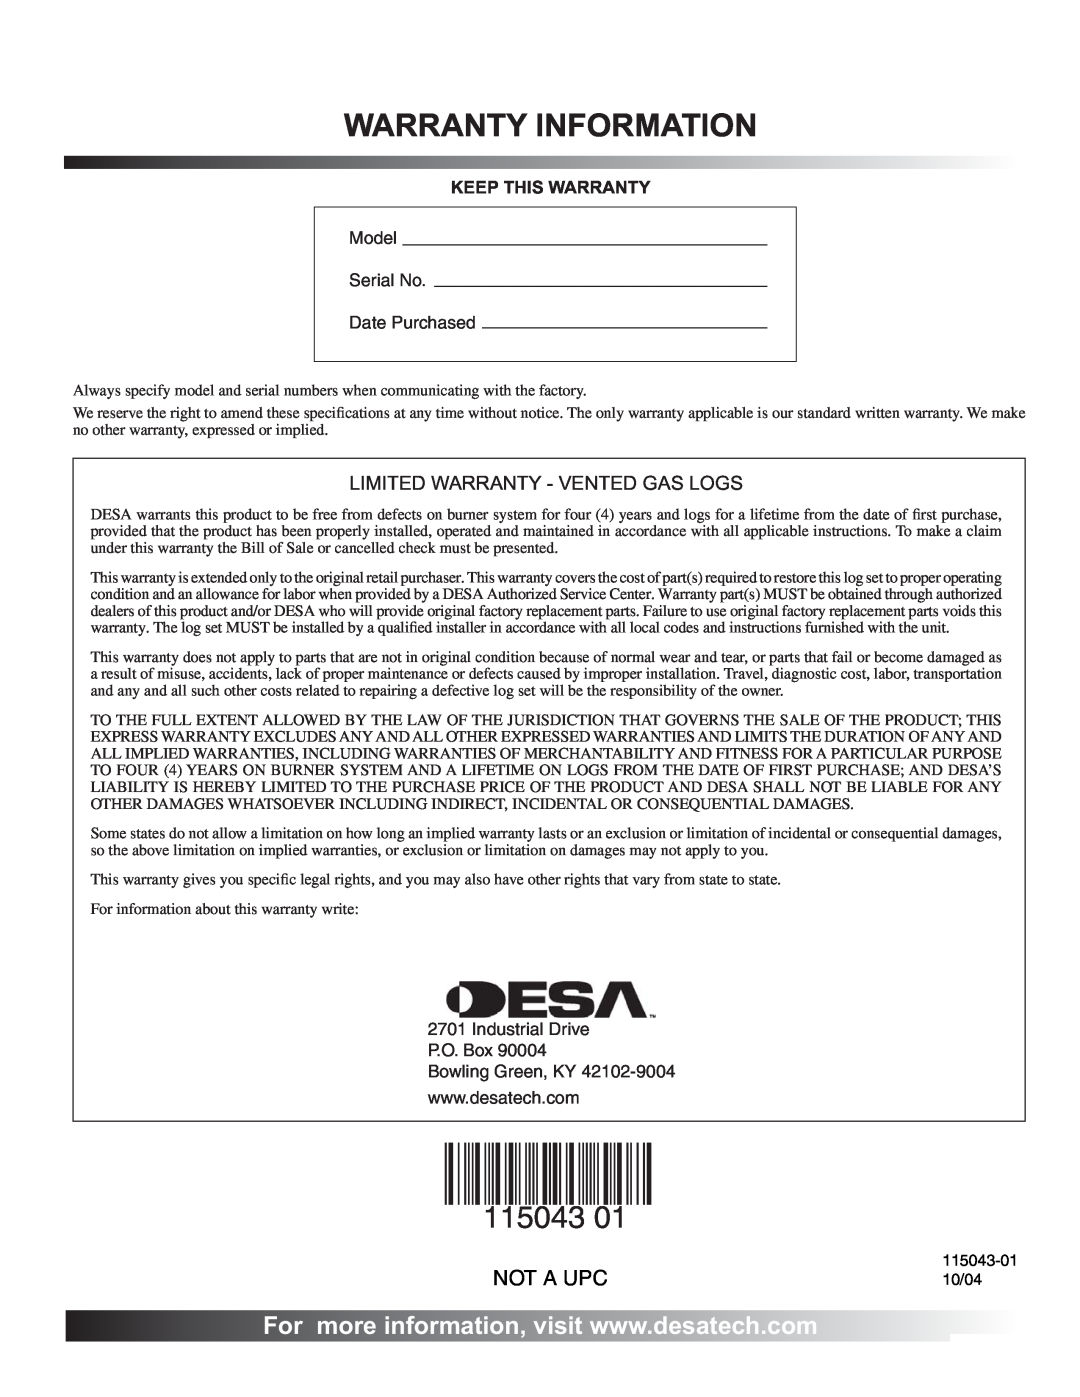 Desa RGA 2-72 Warranty Information, Not A Upc, 115043, Limited Warranty - Vented Gas Logs, Keep This Warranty 